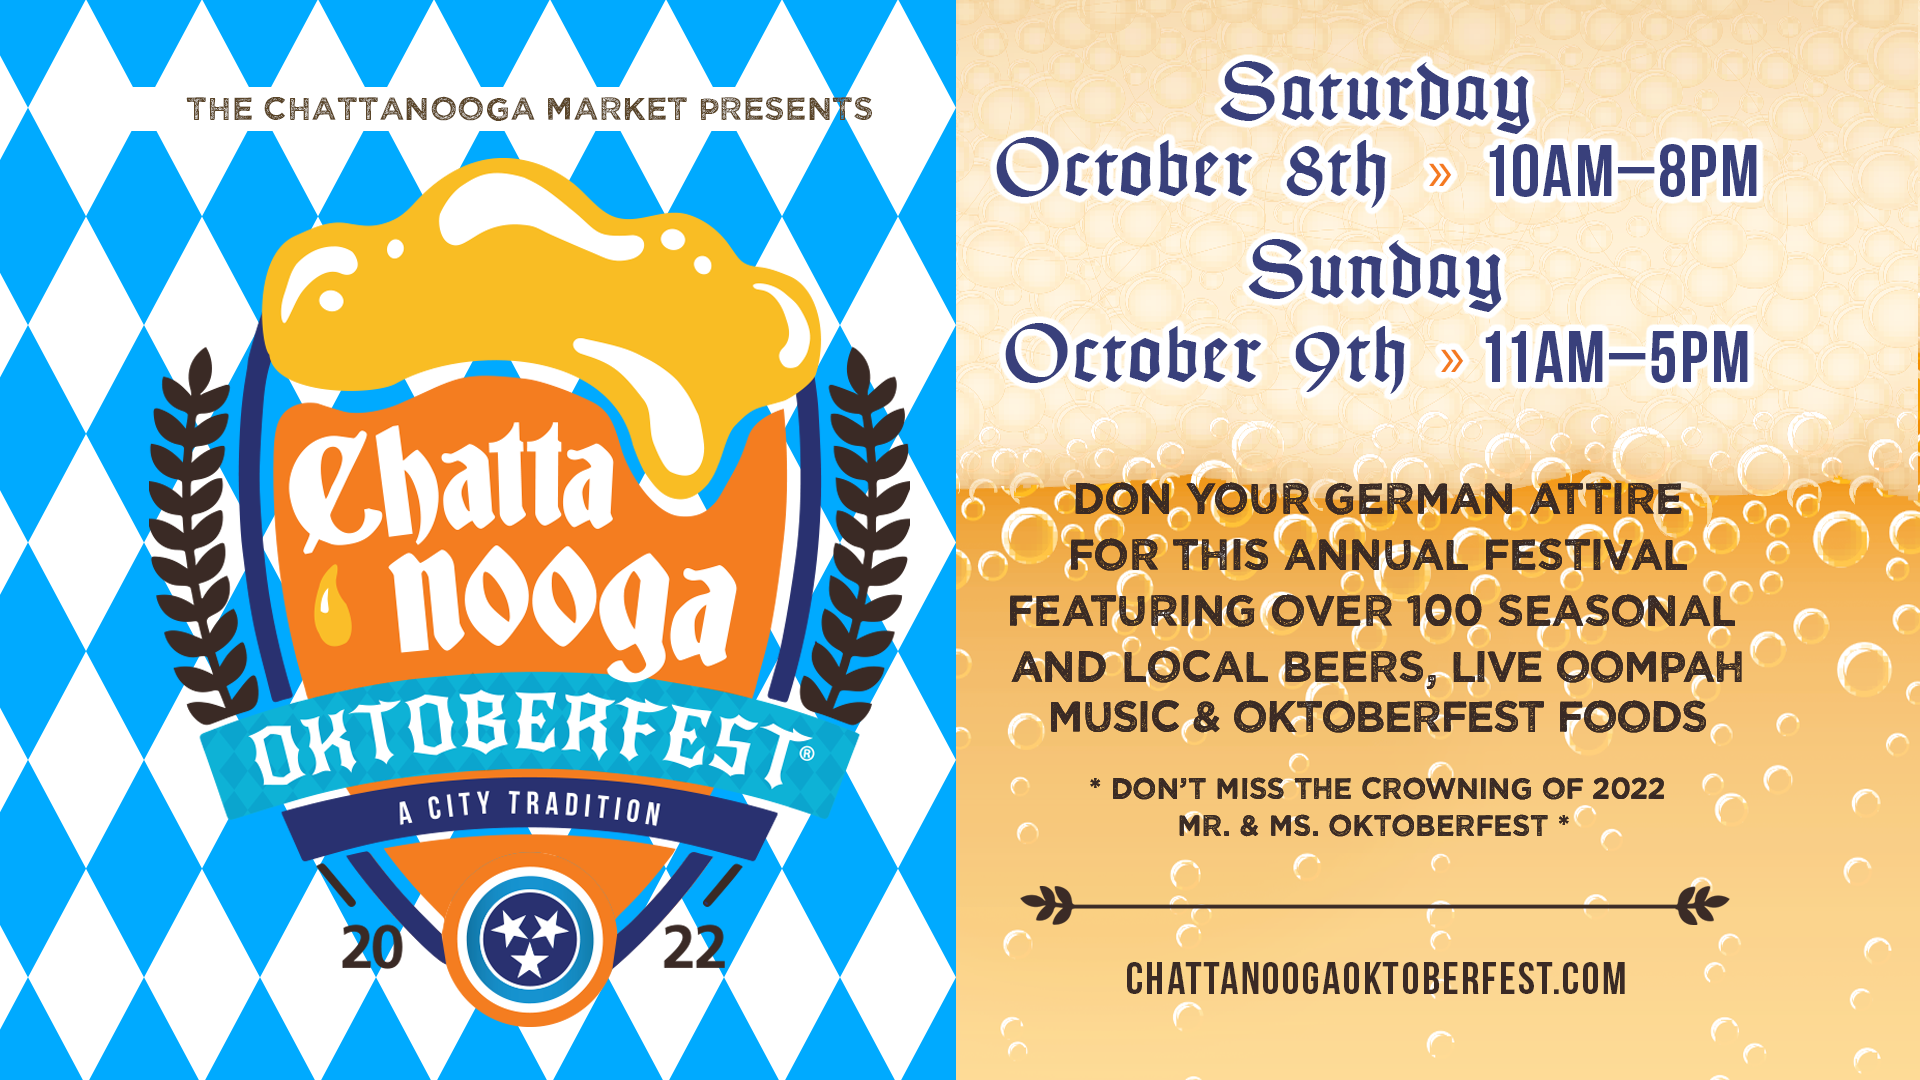 Chattanooga Oktoberfest